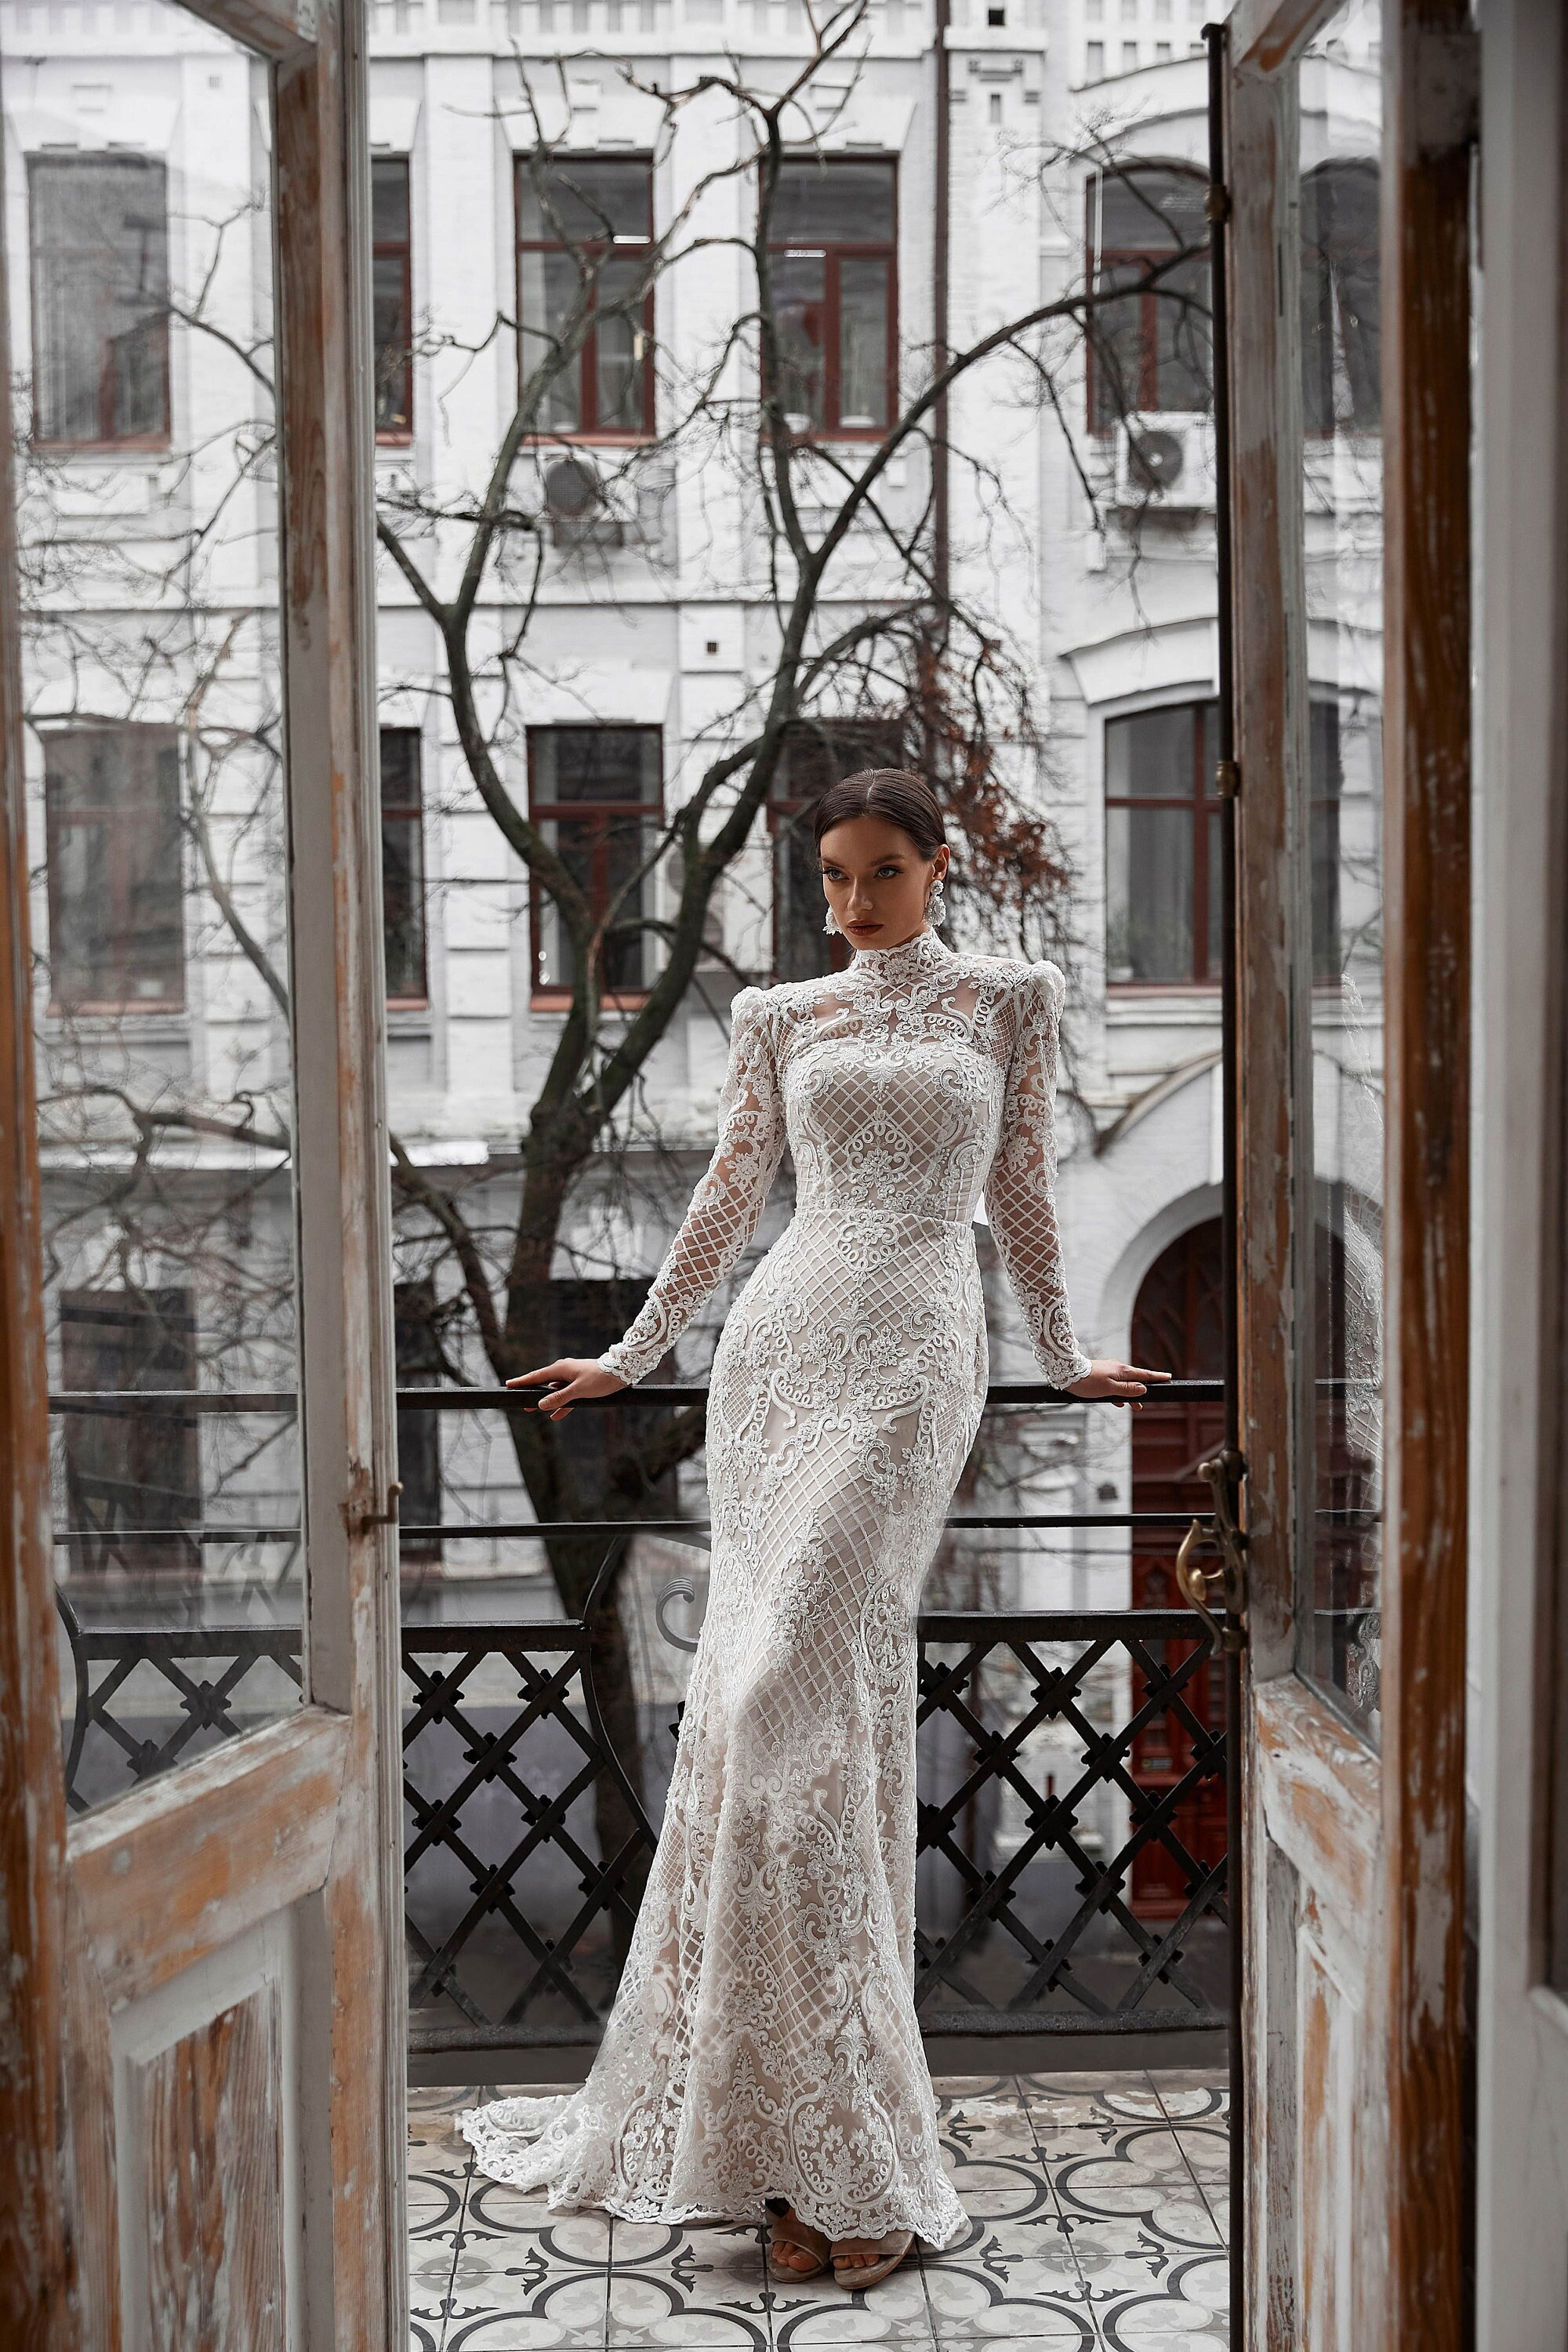 Duet Wedding Dress - Wedding Atelier NYC Suzanne Neville - New York City